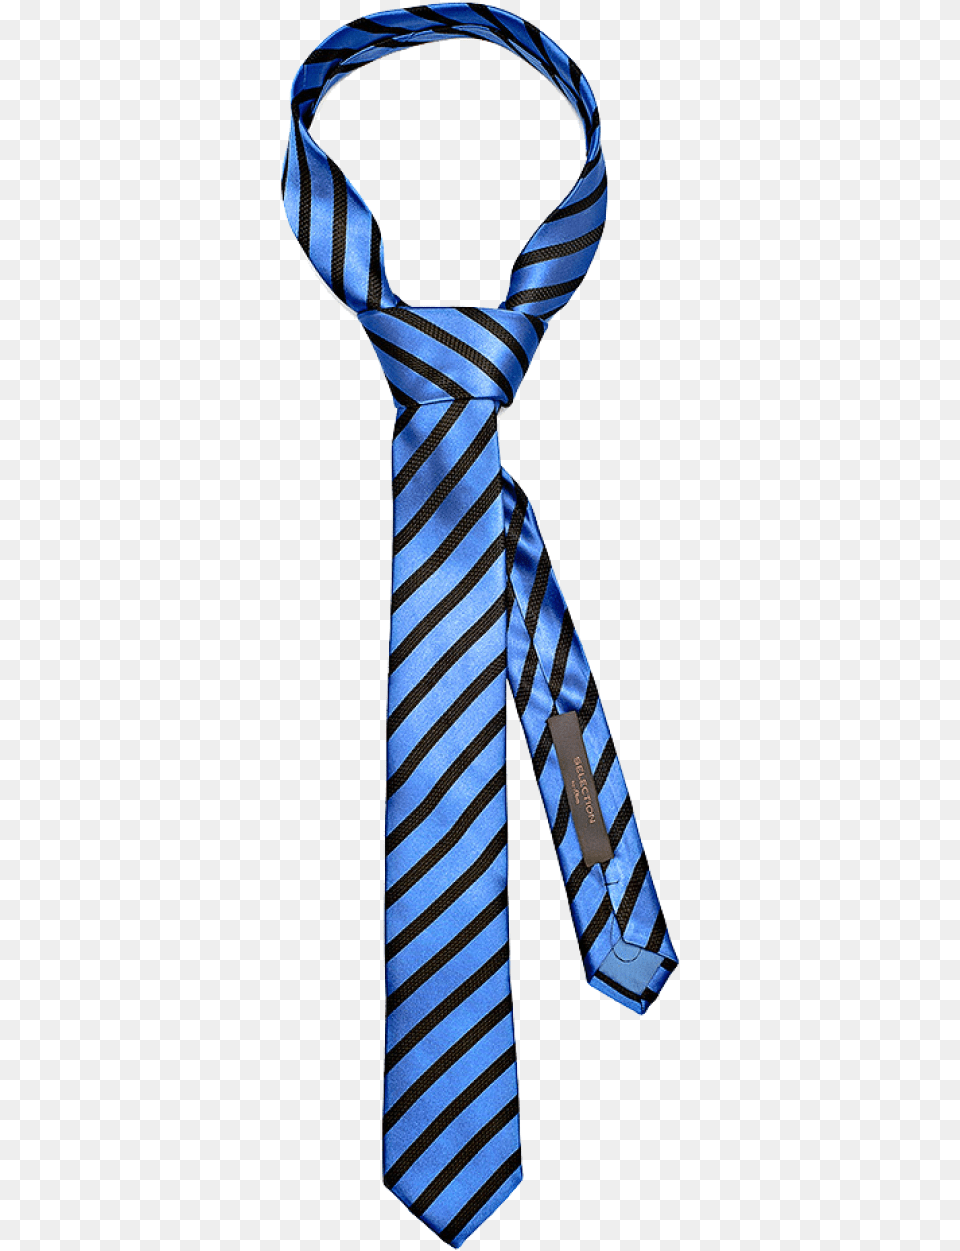 Tie, Accessories, Formal Wear, Necktie Png Image